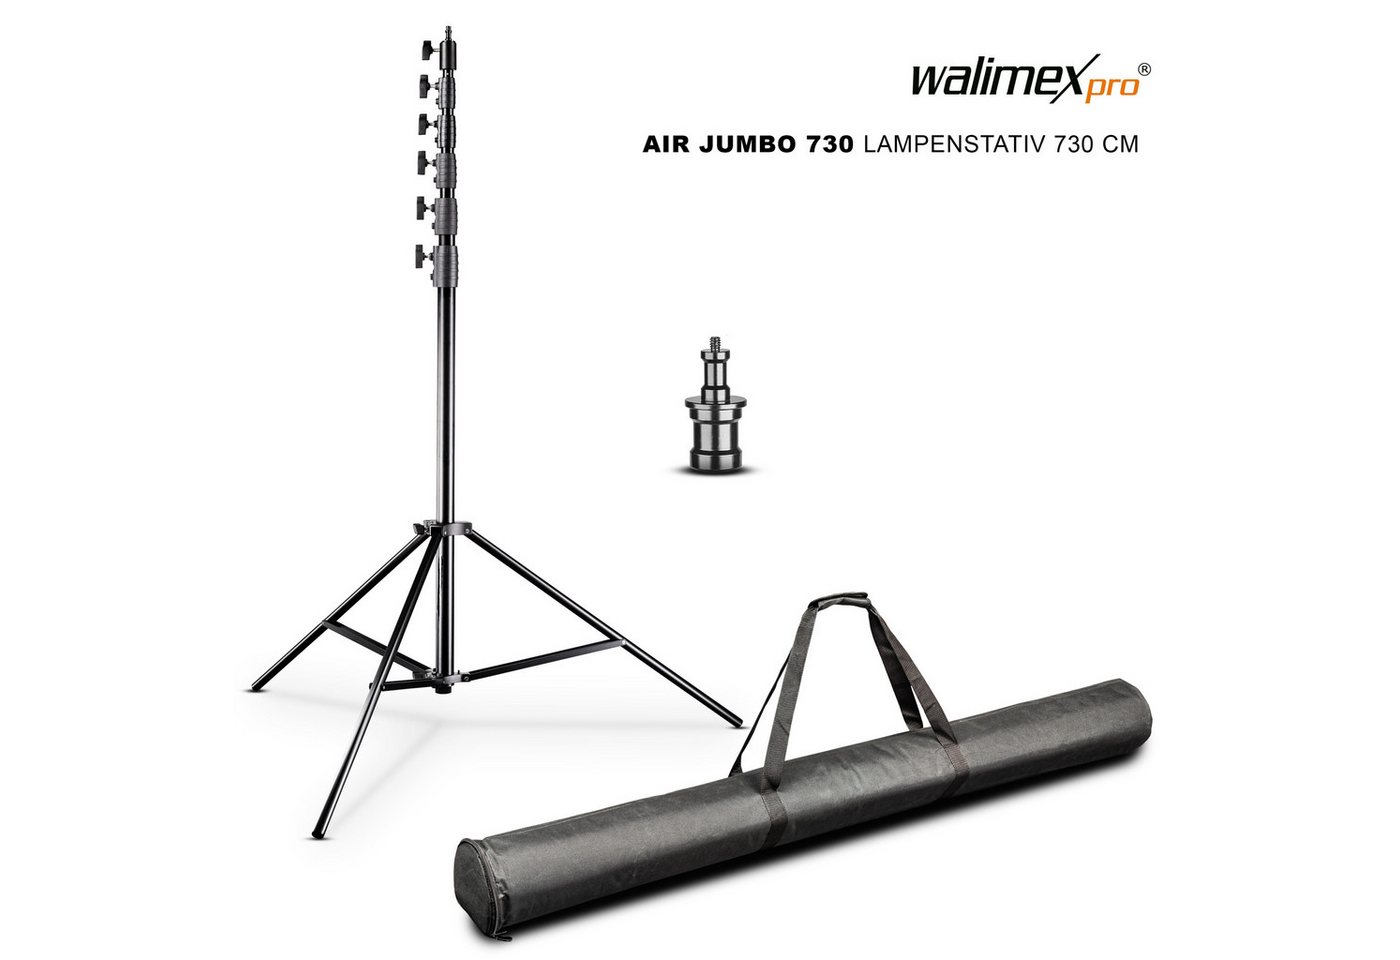 Walimex Pro Jumbo AIR 730 Lampenstativ 730 cm Lampenstativ von Walimex Pro